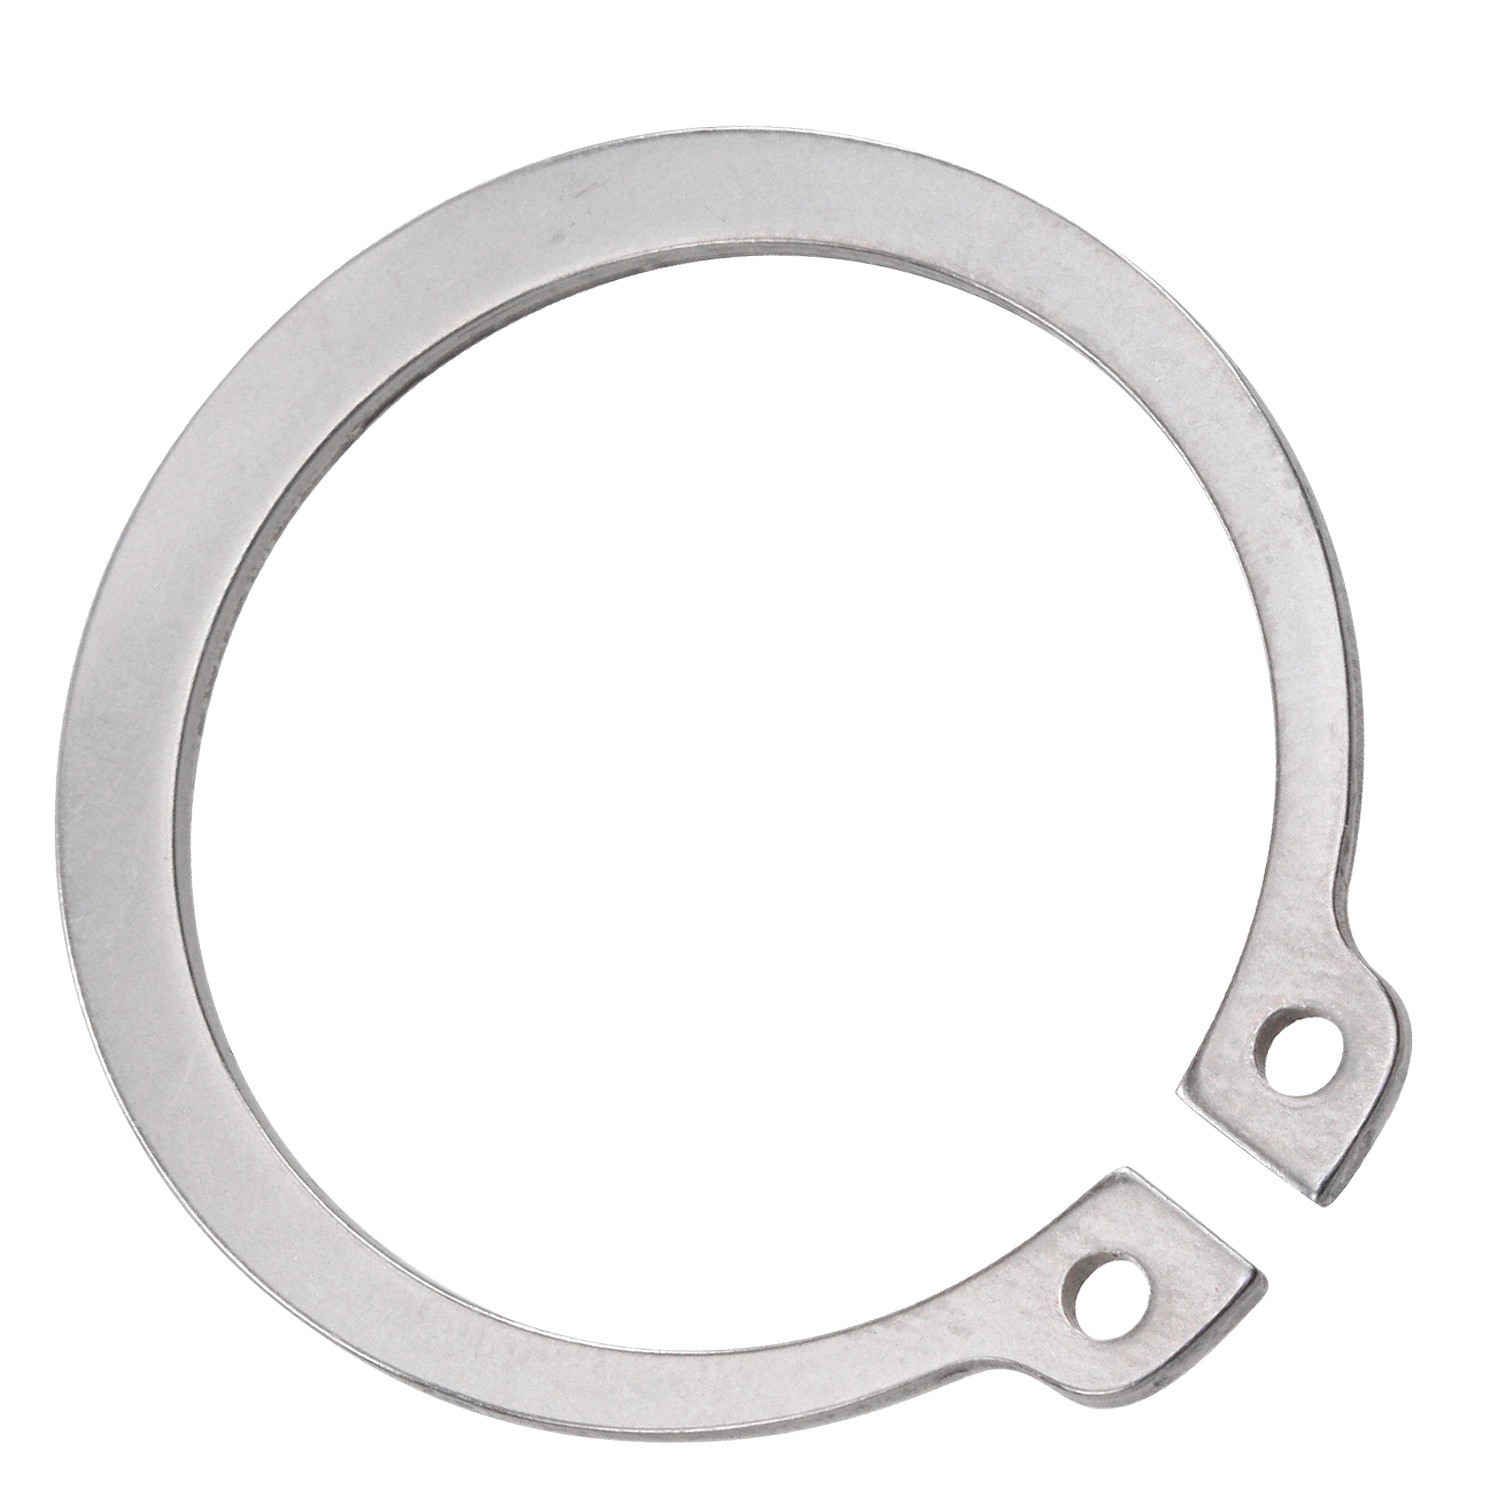 Кольцо стопорное наружное 18х1,2 DIN 471, нержавеющая сталь A4 - фото